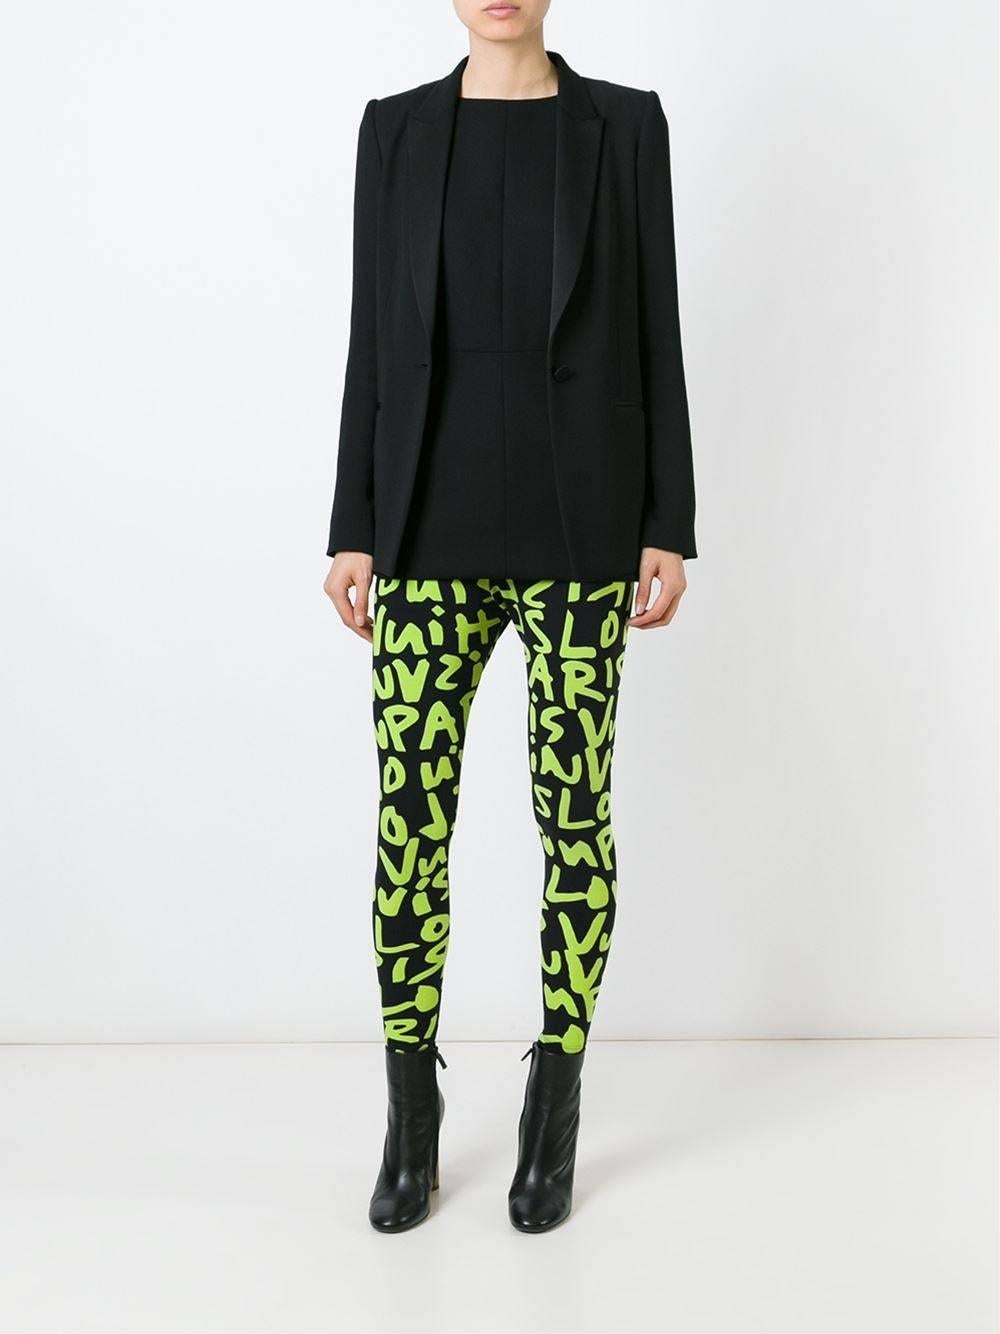 Black and green Stephen Sprouse graffiti leggings. 

Colour: Black and Green

Material: Polyamide 80% Spandex / Elastane 20%

Measurements: Waist: 70cm, Hips: 100cm, Front rise: 29cm, Back rise: 30cm, Inside leg: 63cm, Hem width: